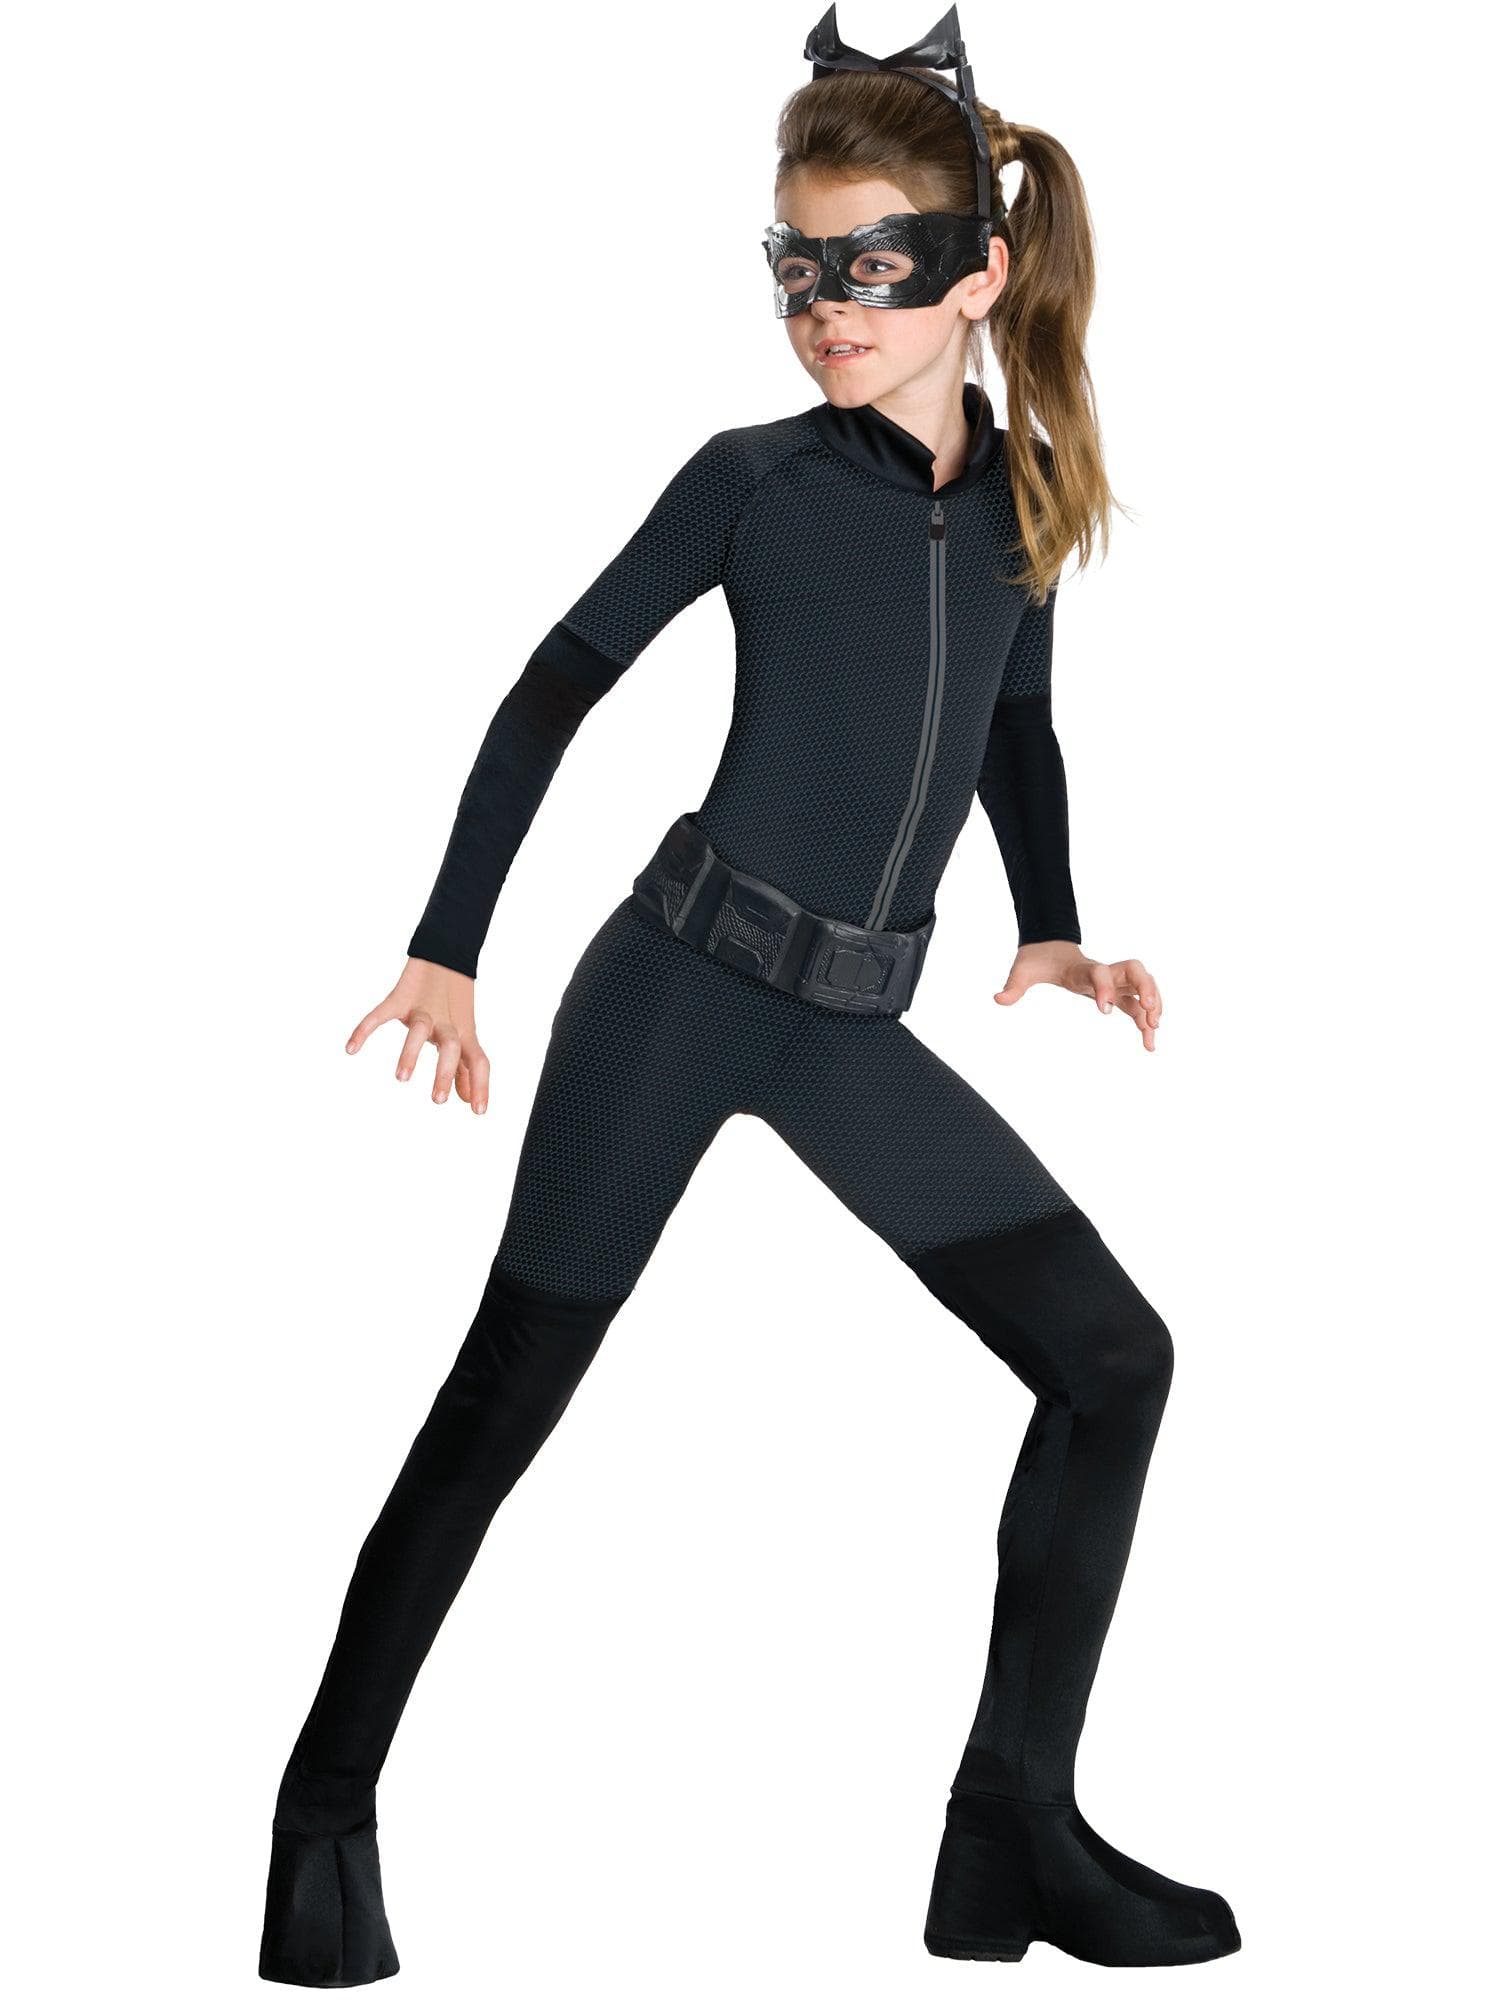 Kids Dark Knight Catwoman Costume - costumes.com